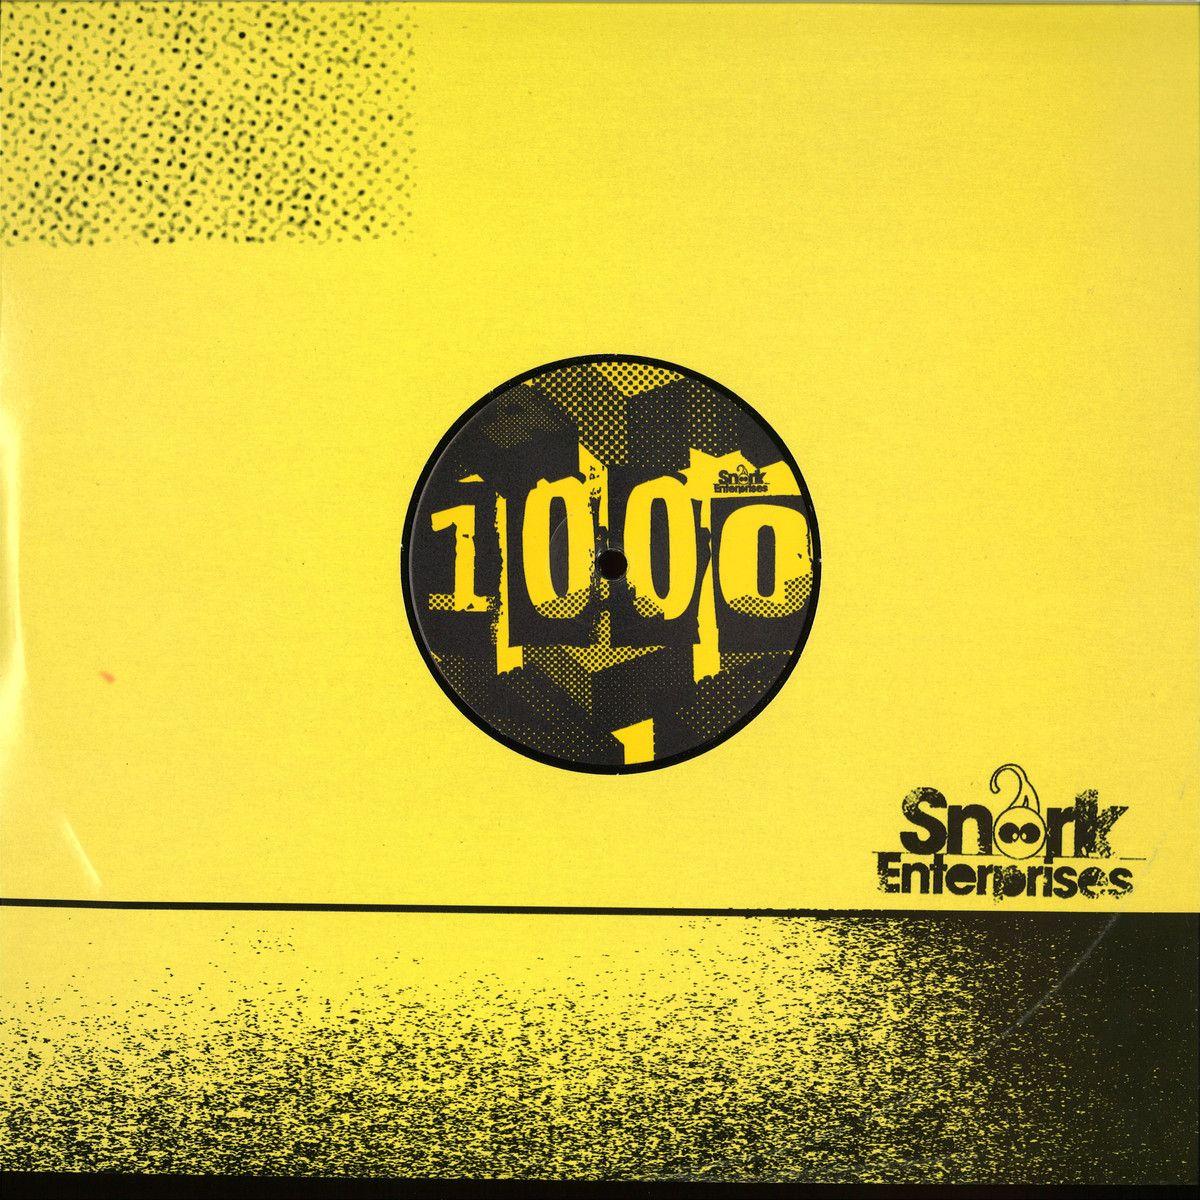 Snork's Logo - Neil Landstrumm - 1000 / Snork Enterprises SNORK1000 - Vinyl